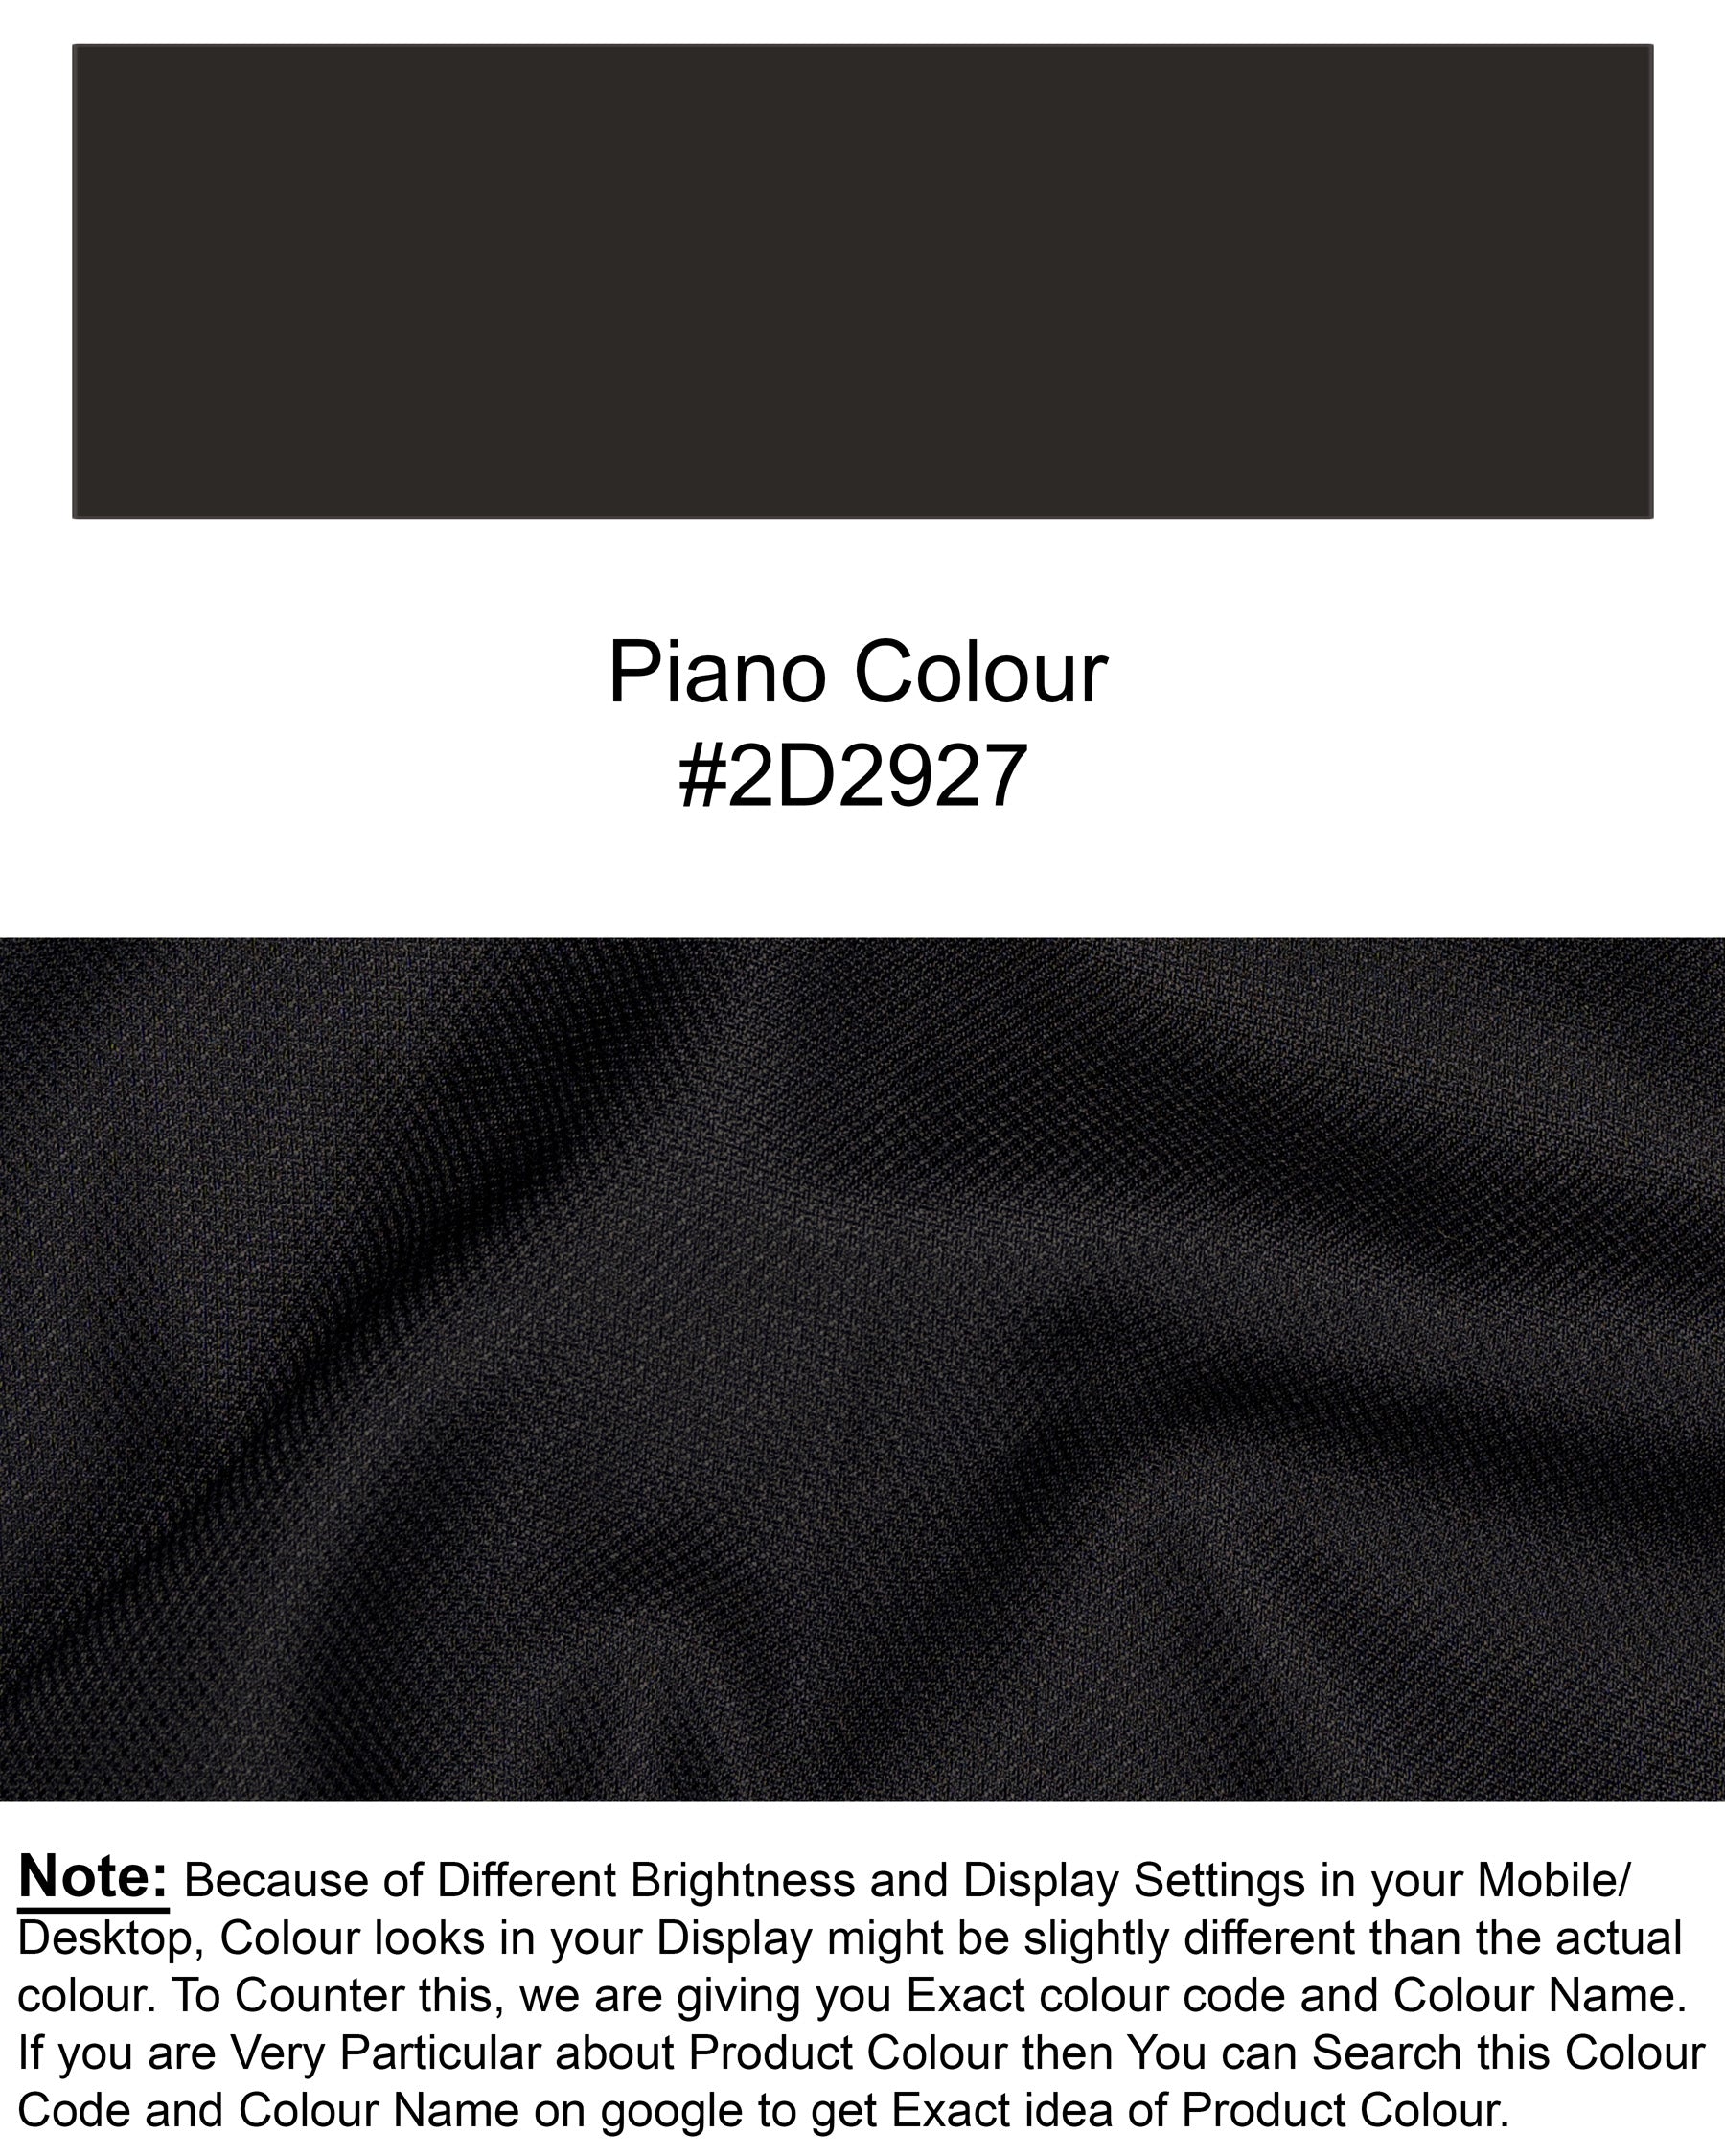 Piano Black Wool Rich Waistcoat V1467-36, V1467-38, V1467-40, V1467-42, V1467-44, V1467-46, V1467-48, V1467-50, V1467-52, V1467-54, V1467-56, V1467-58, V1467-60